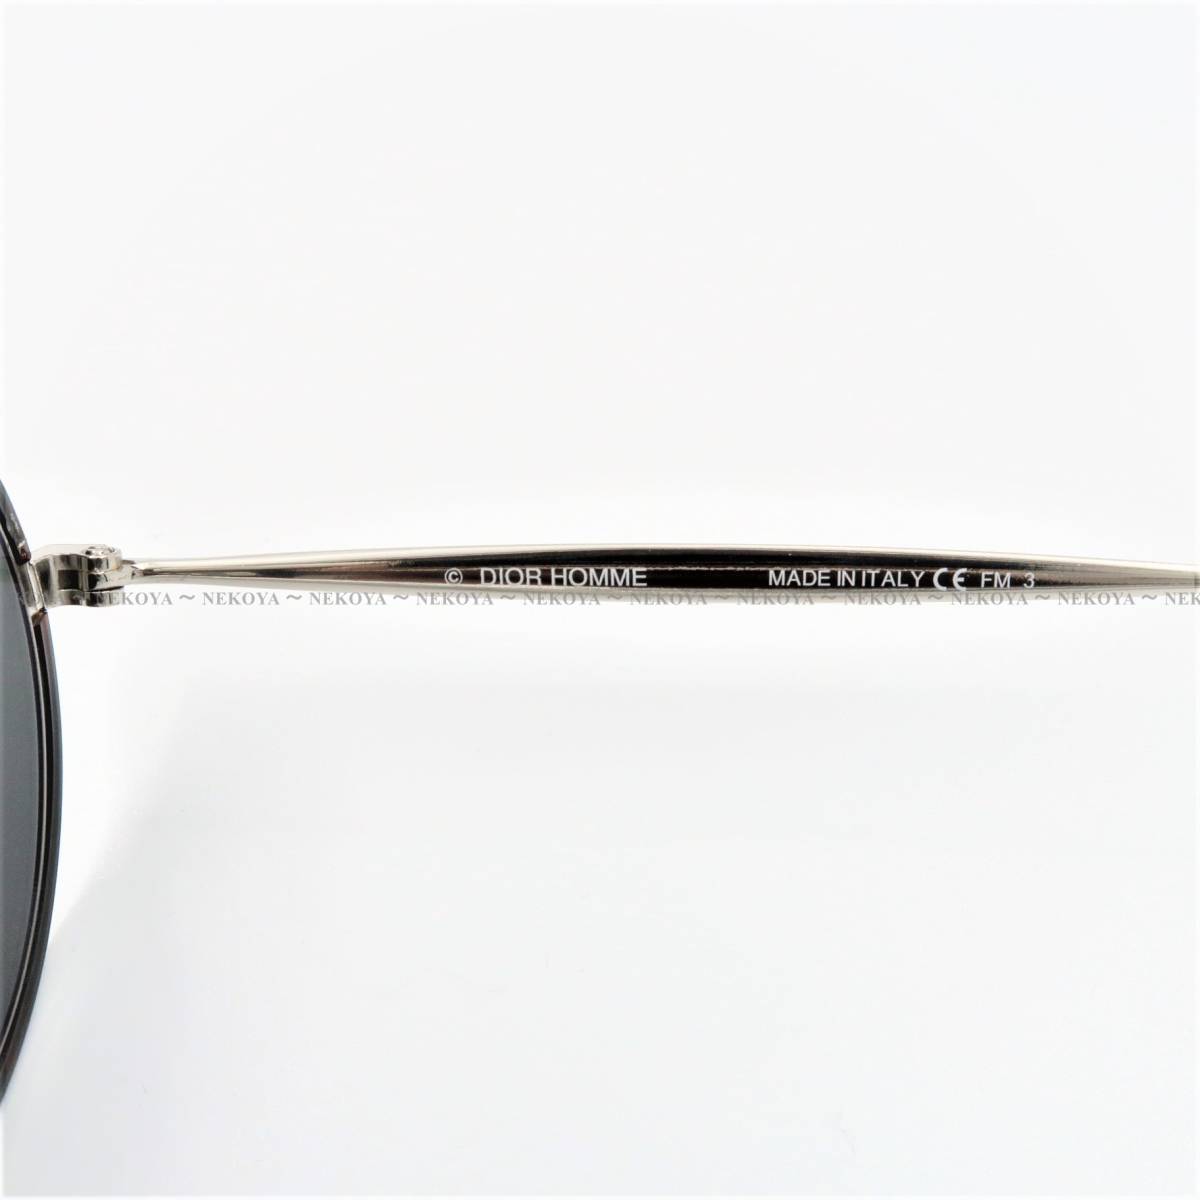 DIOR HOMME DIORSYNTHESIS солнцезащитные очки Habana . склон широкий . Dior Homme 